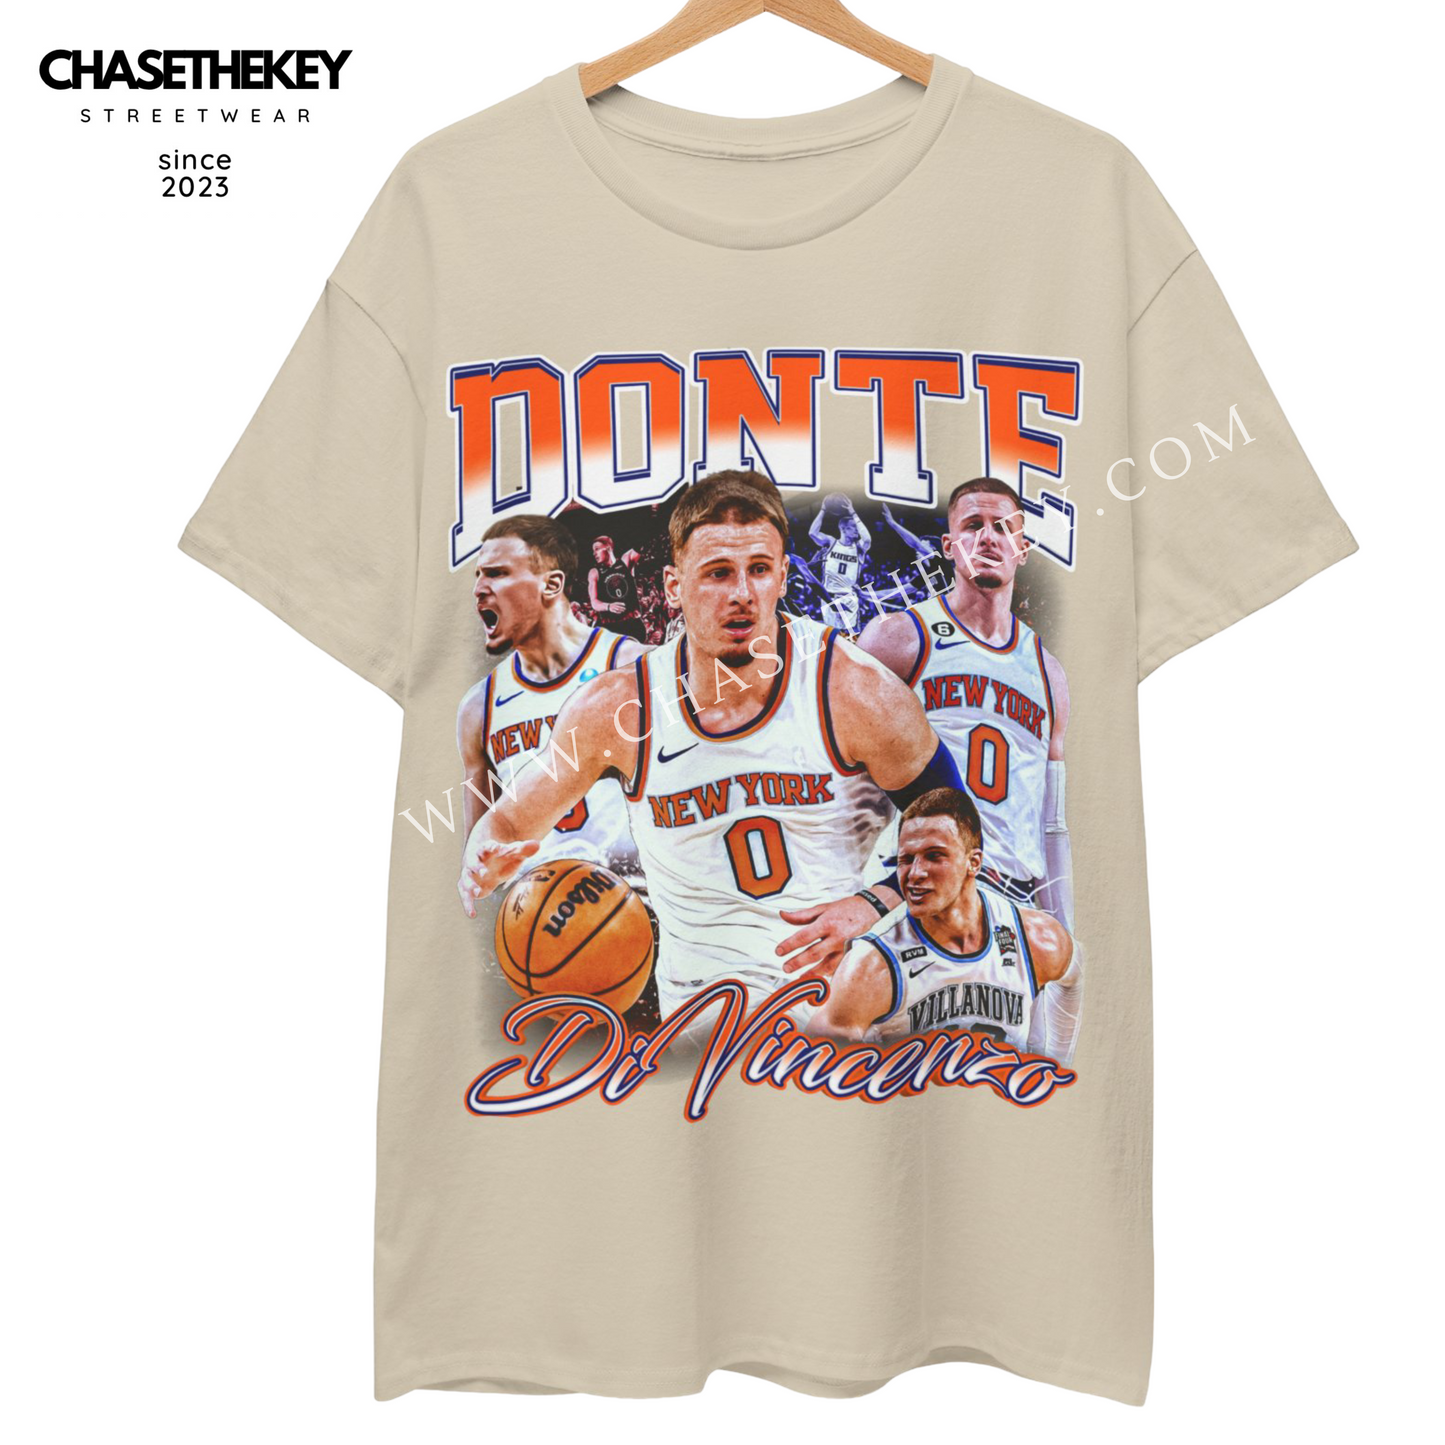 DiVincenzo Knicks Shirt